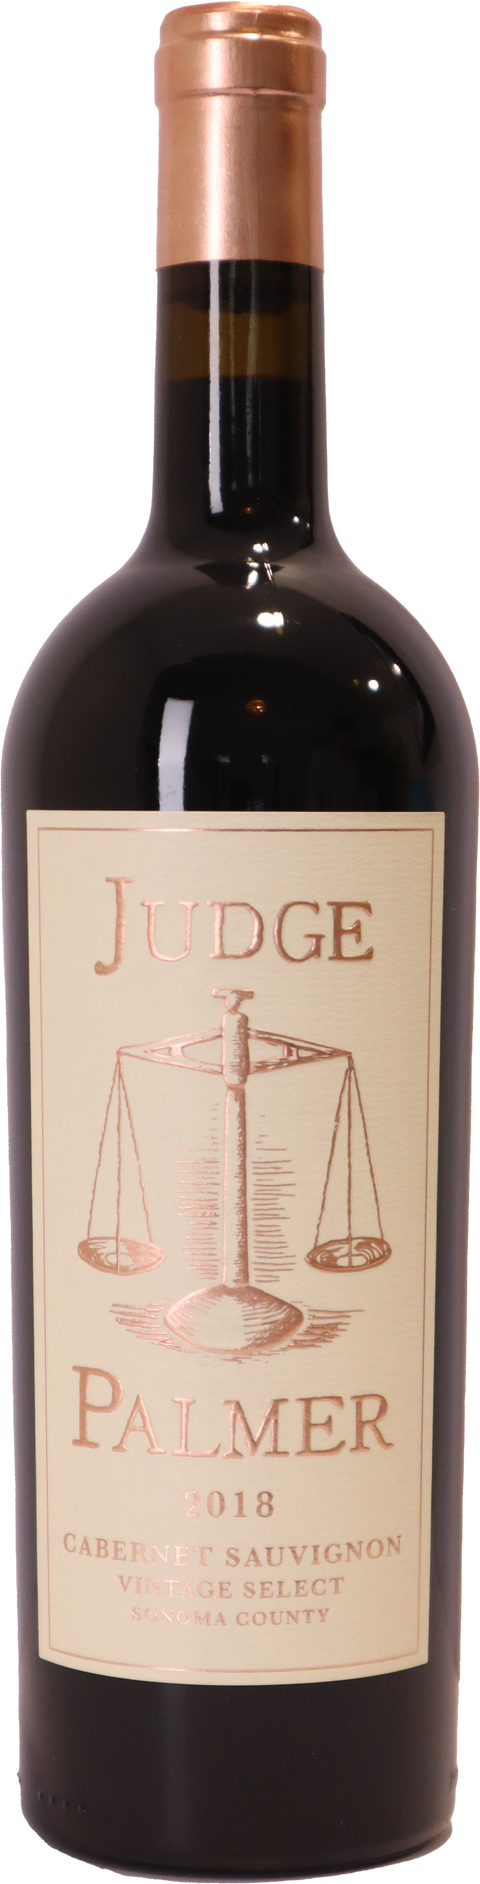 2019 Judge Palmer "Vintage Select" Cabernet Sauvignon, Sonoma County, USA